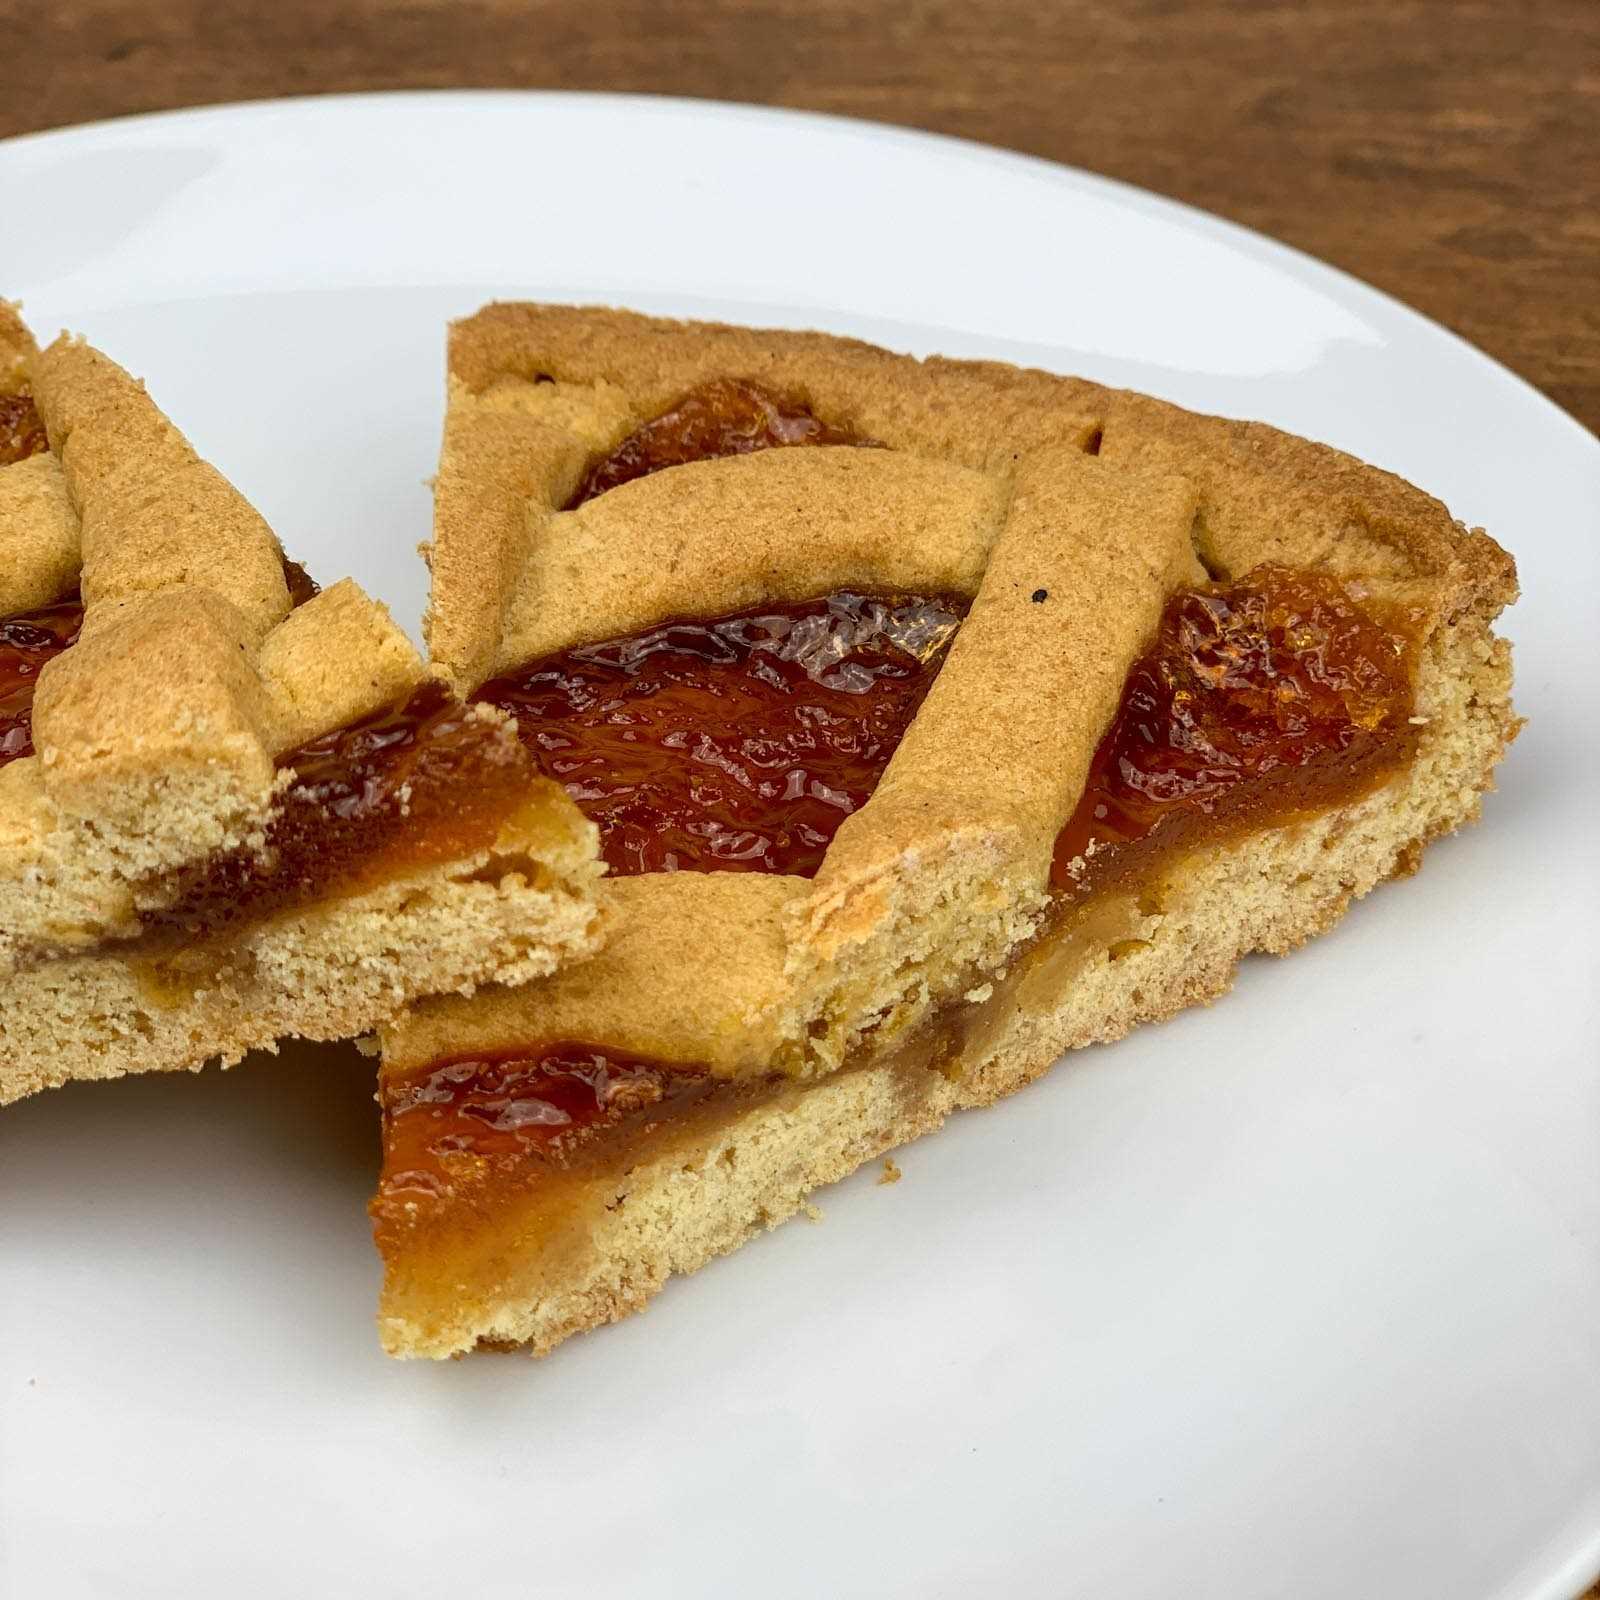 “Crostata” Verna Wheat Apricot Jam Pie.